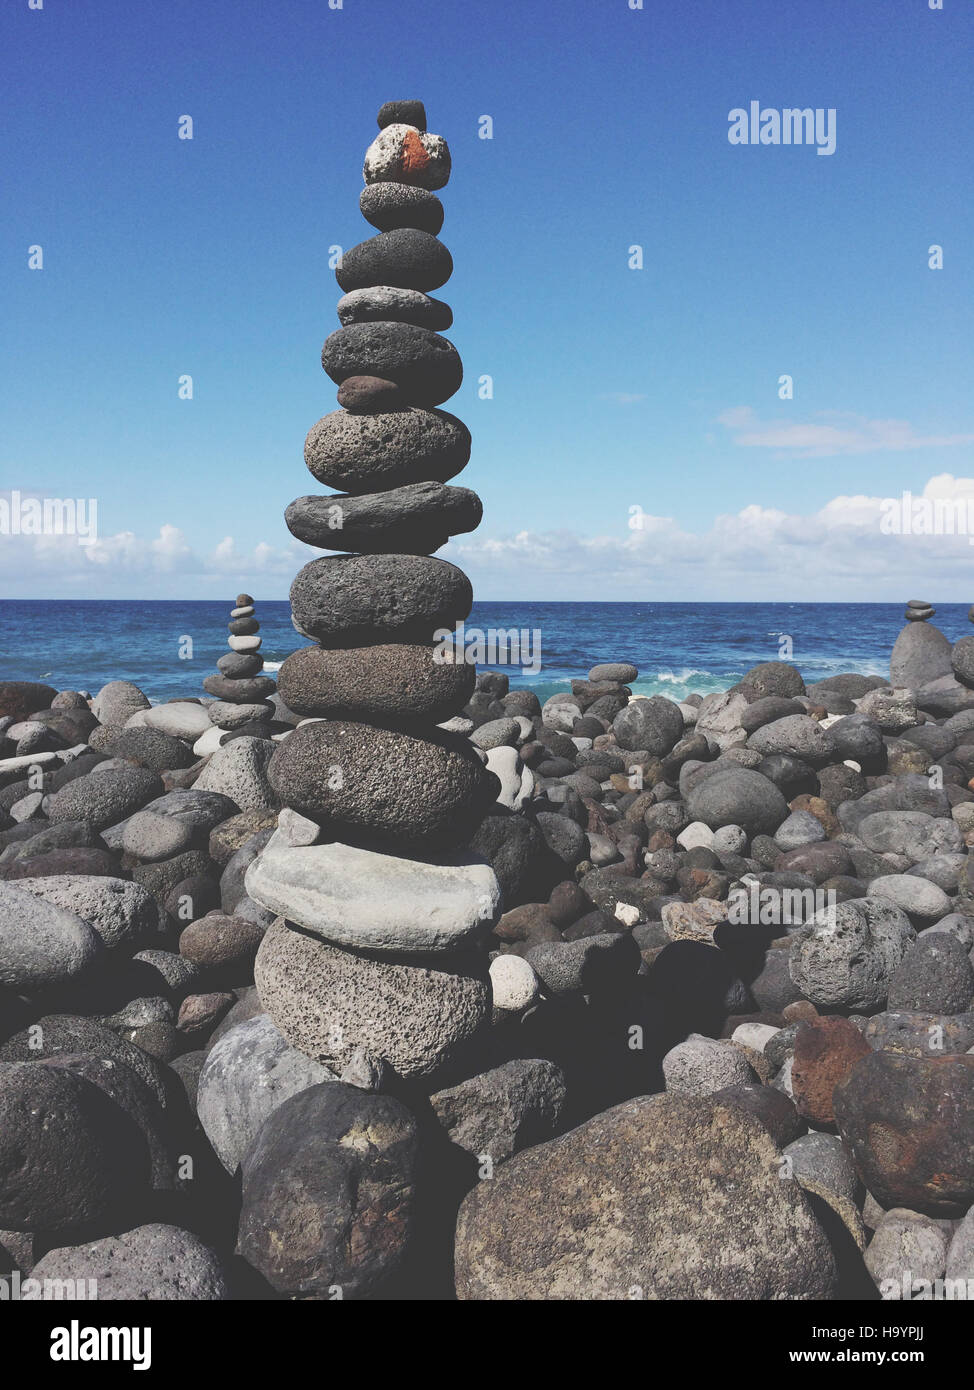 stone pyramid, stacked pebble stone tower at beach Stock Photo